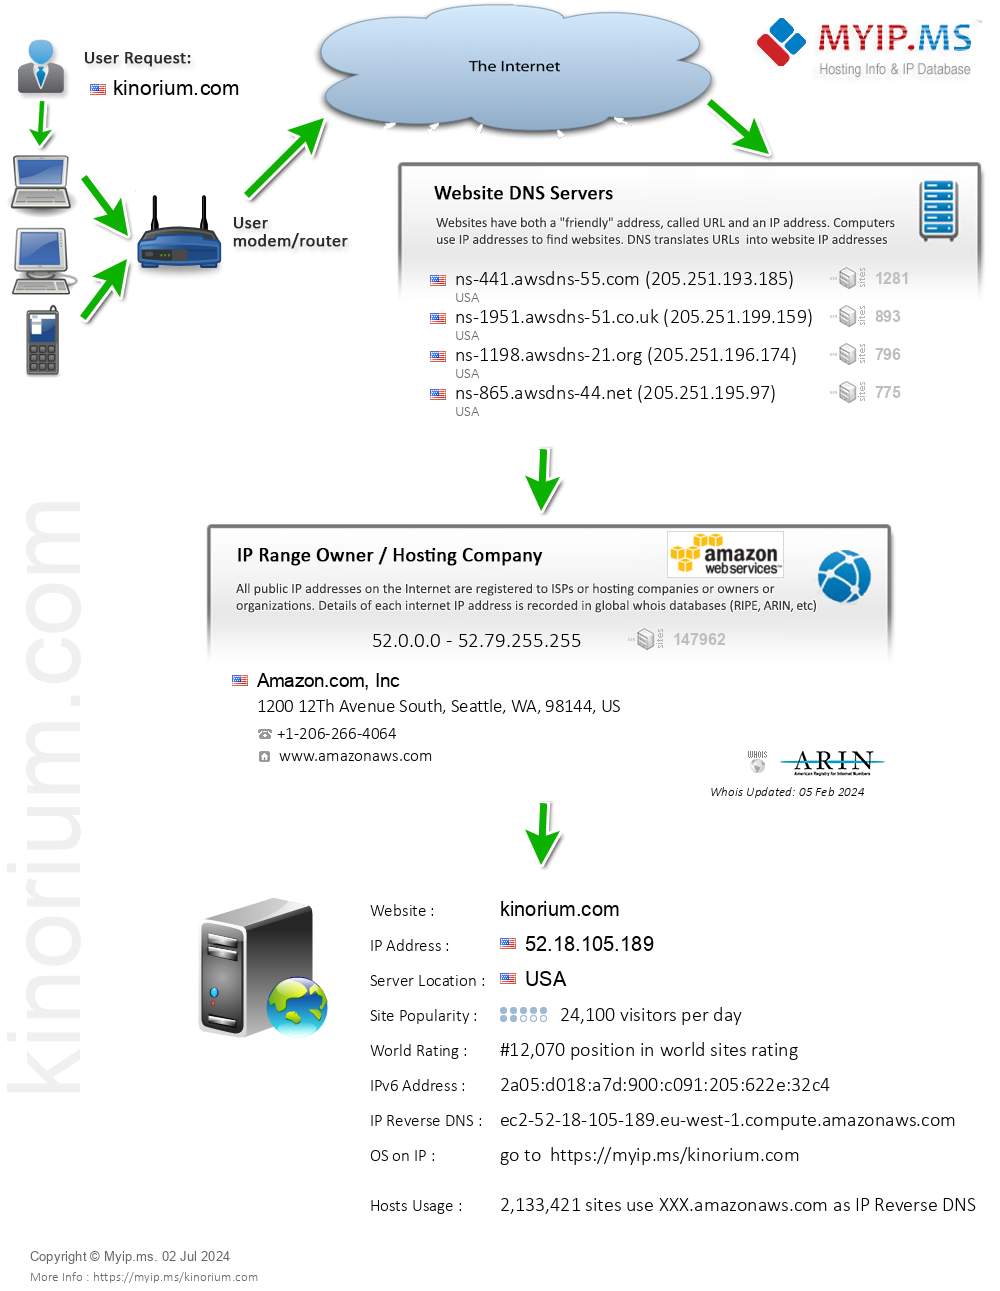 Kinorium.com - Website Hosting Visual IP Diagram